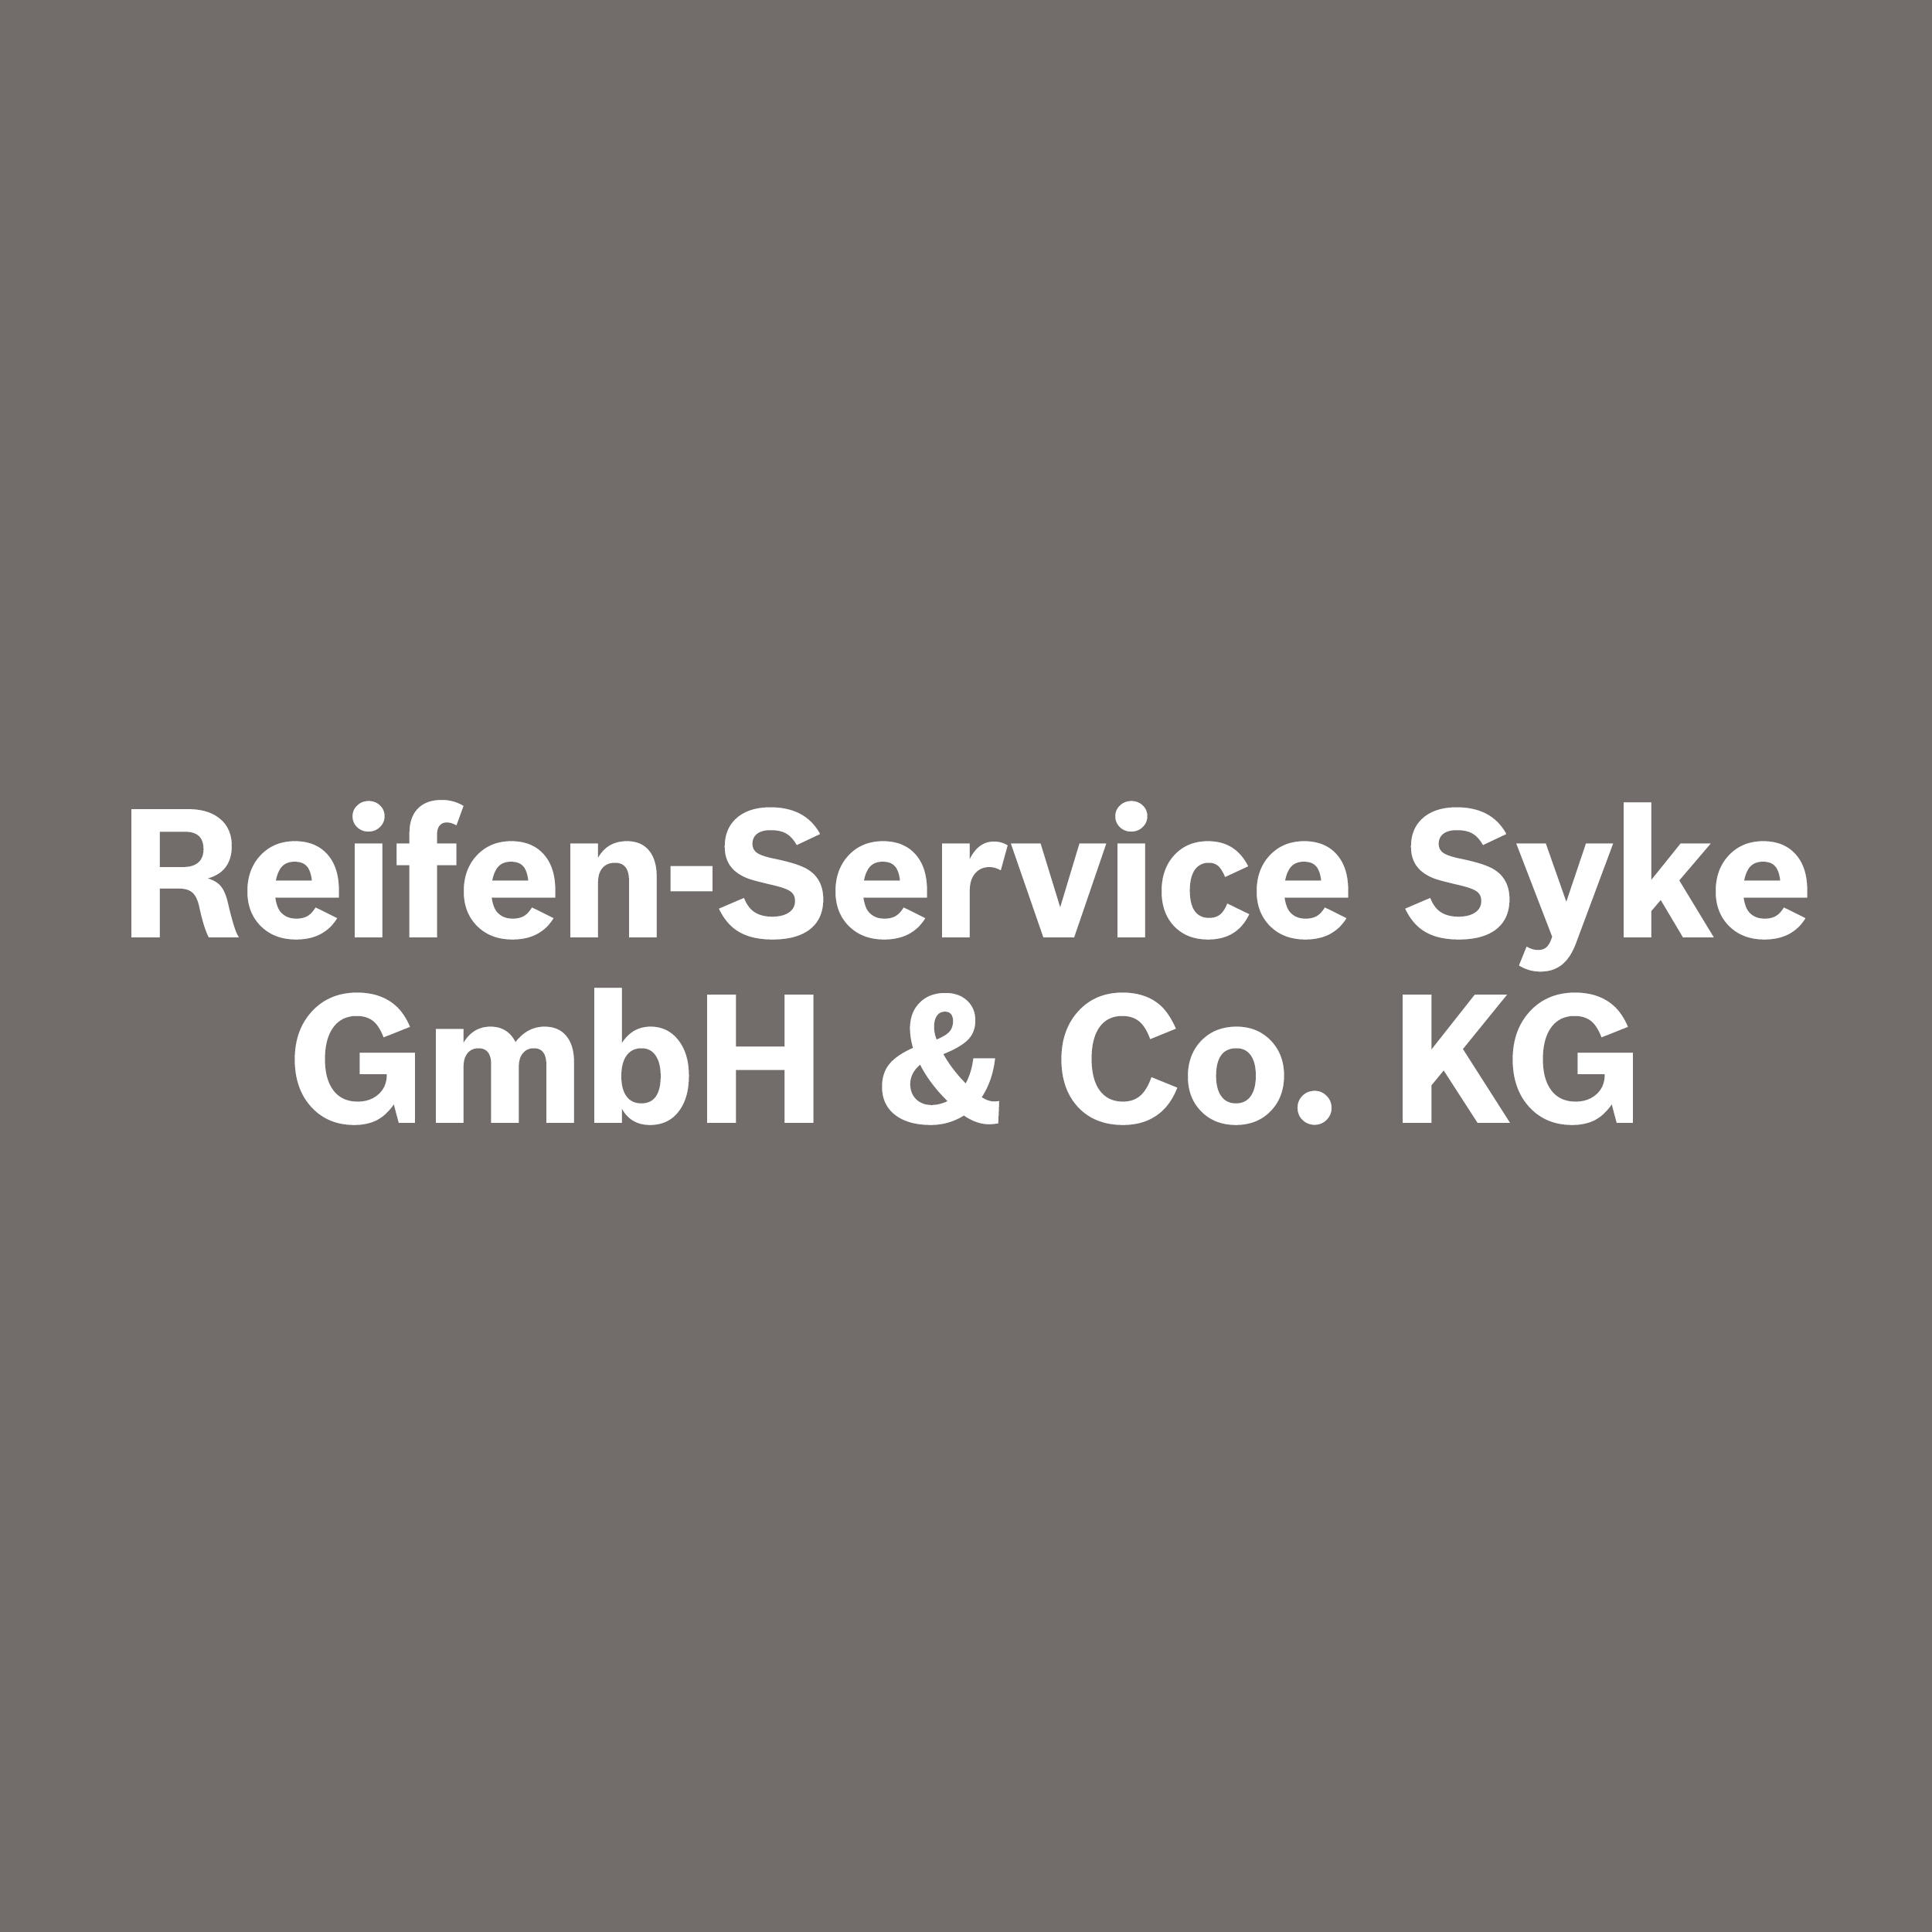 Reifen-Service Syke GmbH & Co. KG  